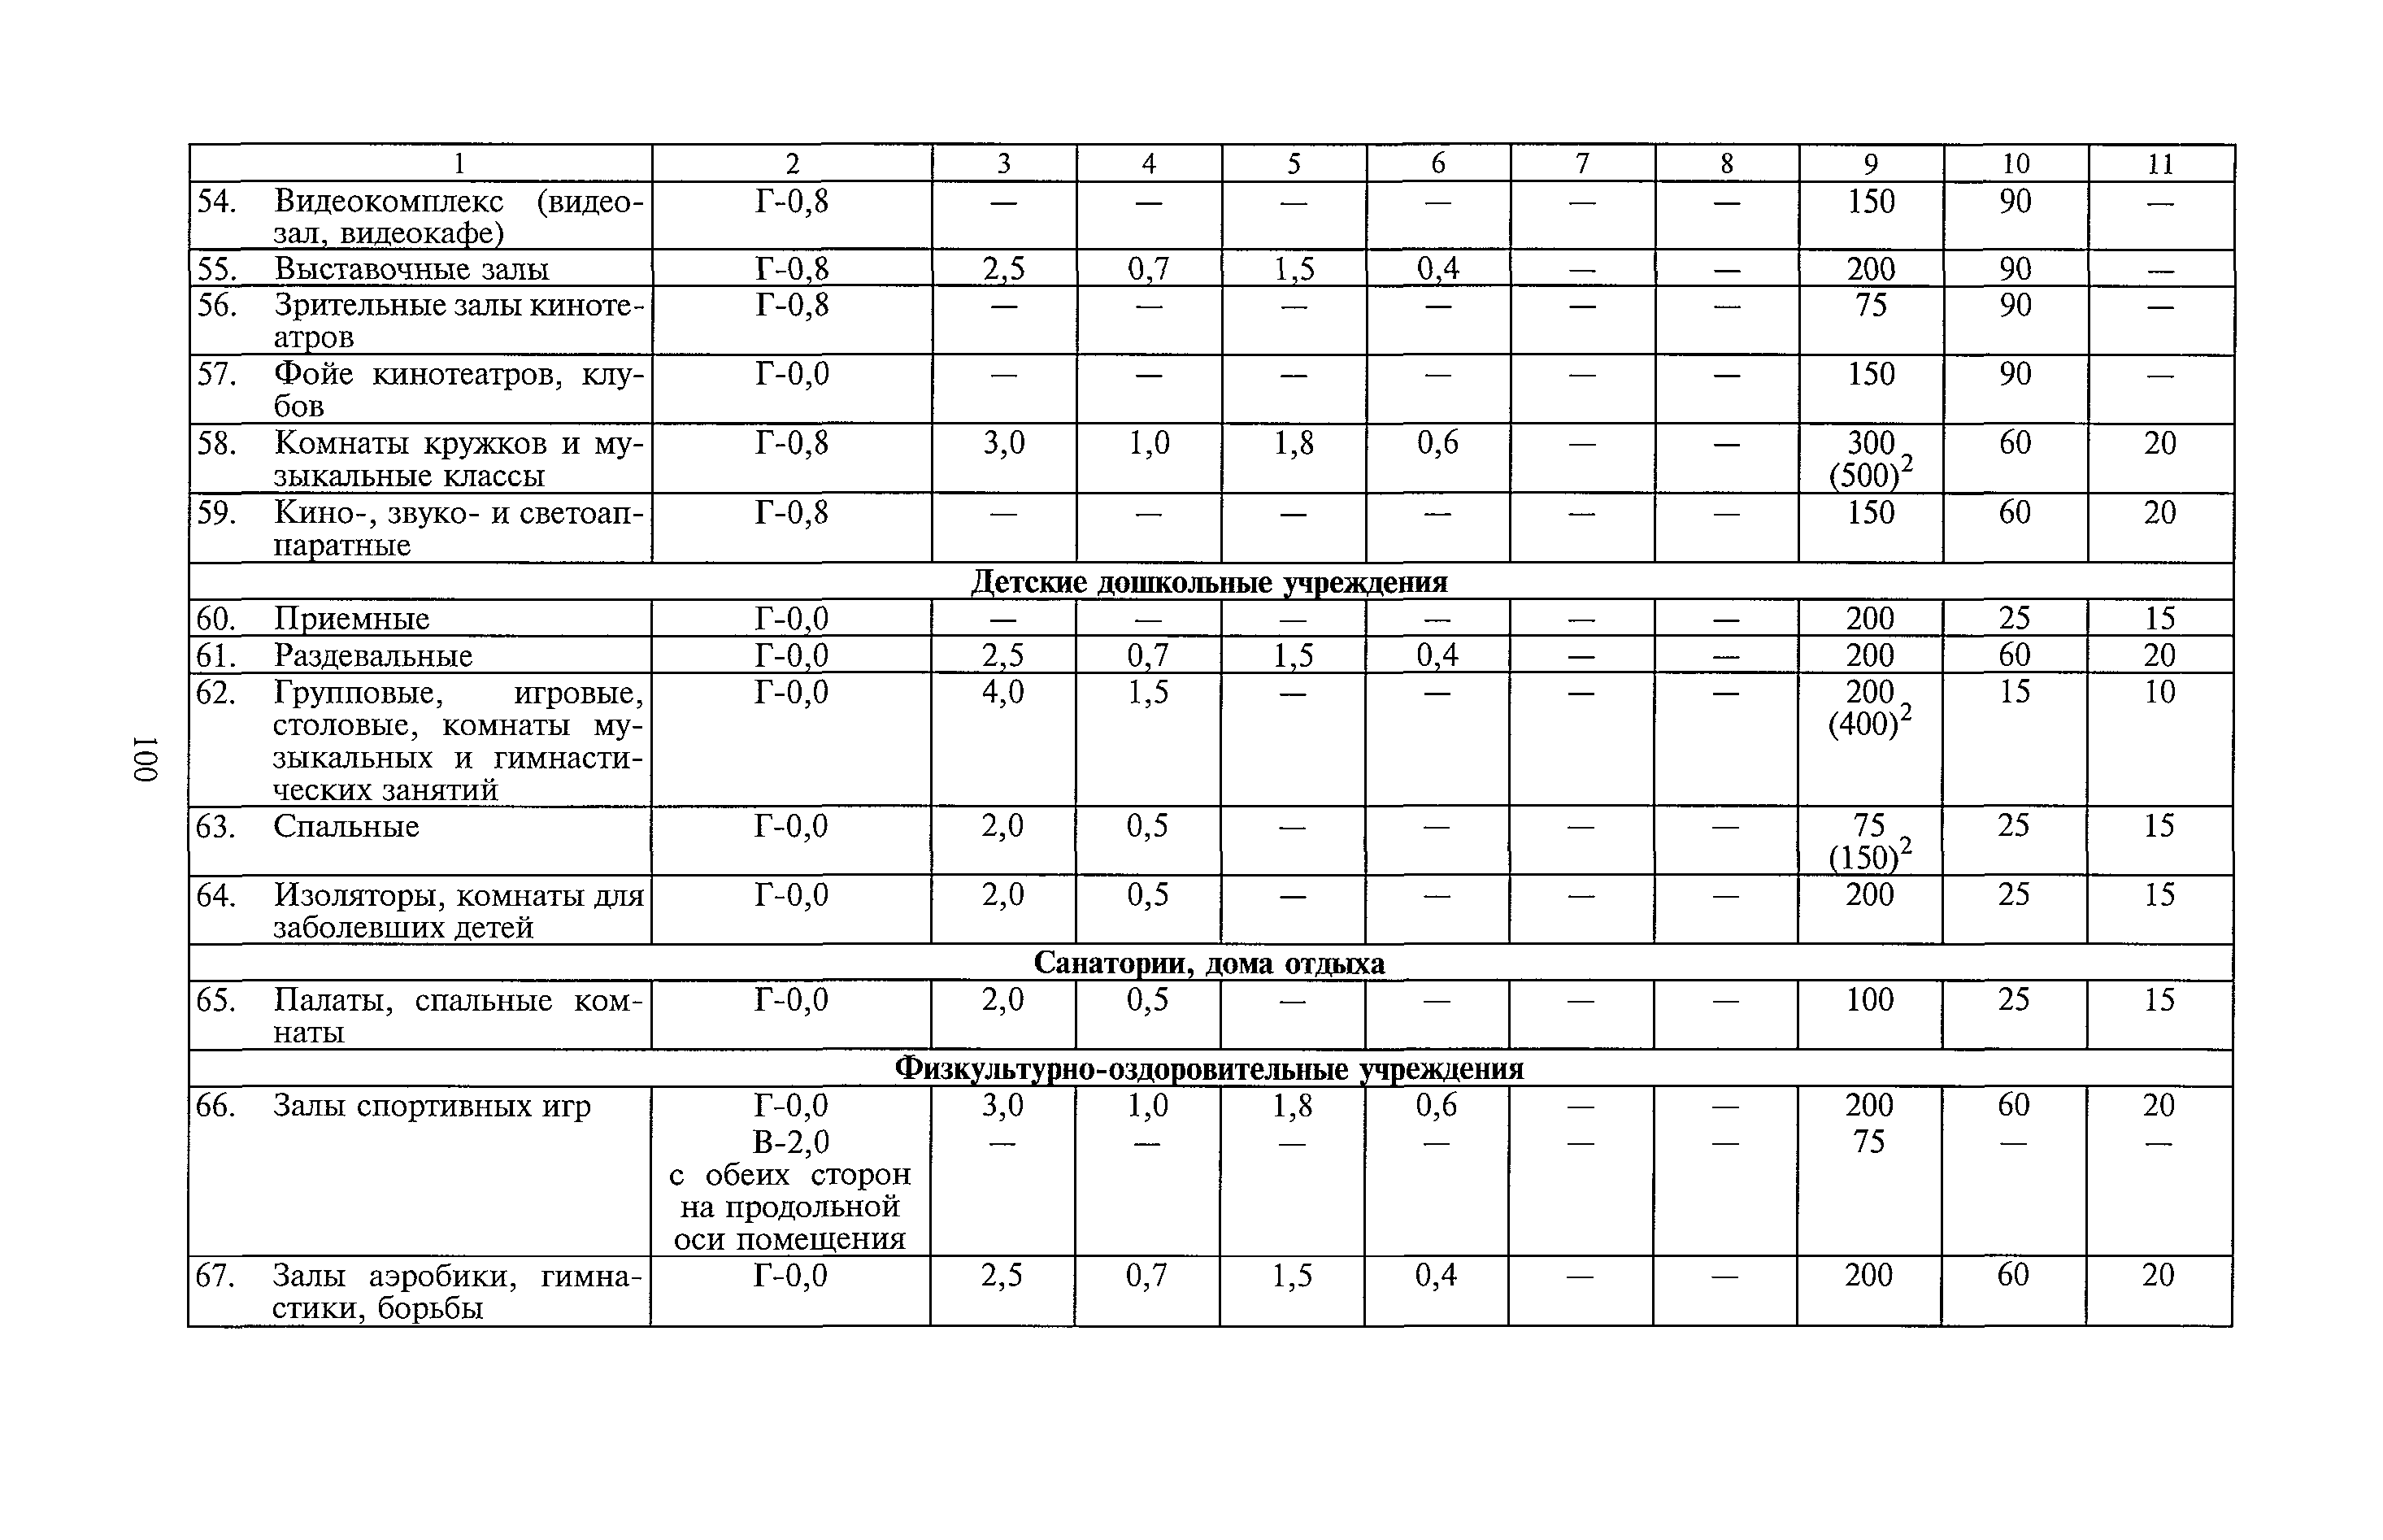 Санпин 3685 с изменениями на 2023 год